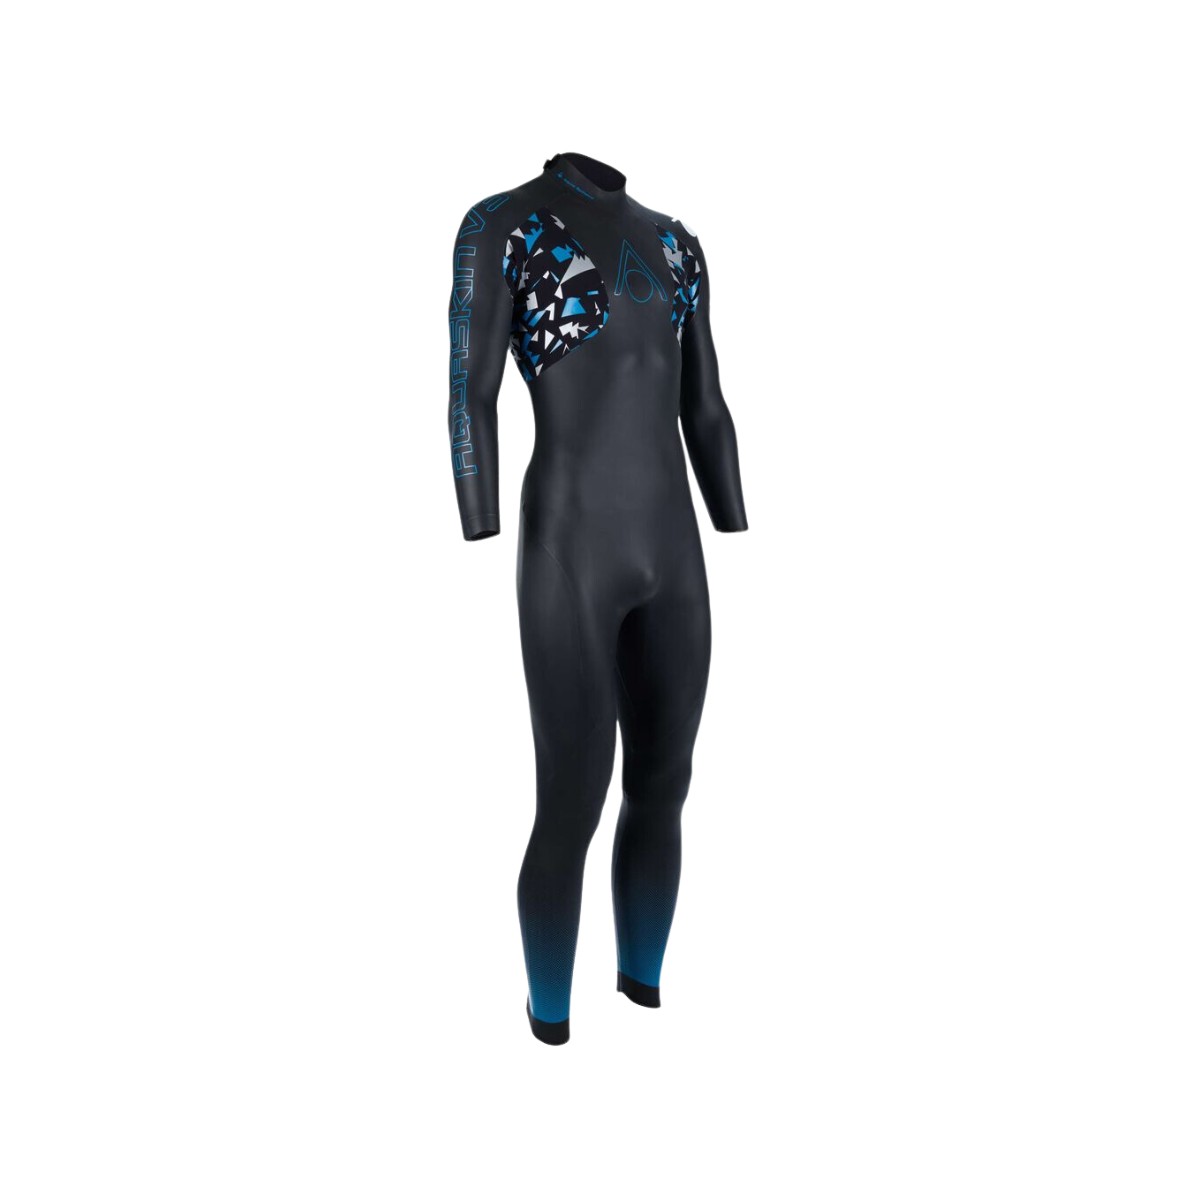 Wetsuit Aquasphere Aquaskin Full Suit V3 Black Turquoise, Size XL